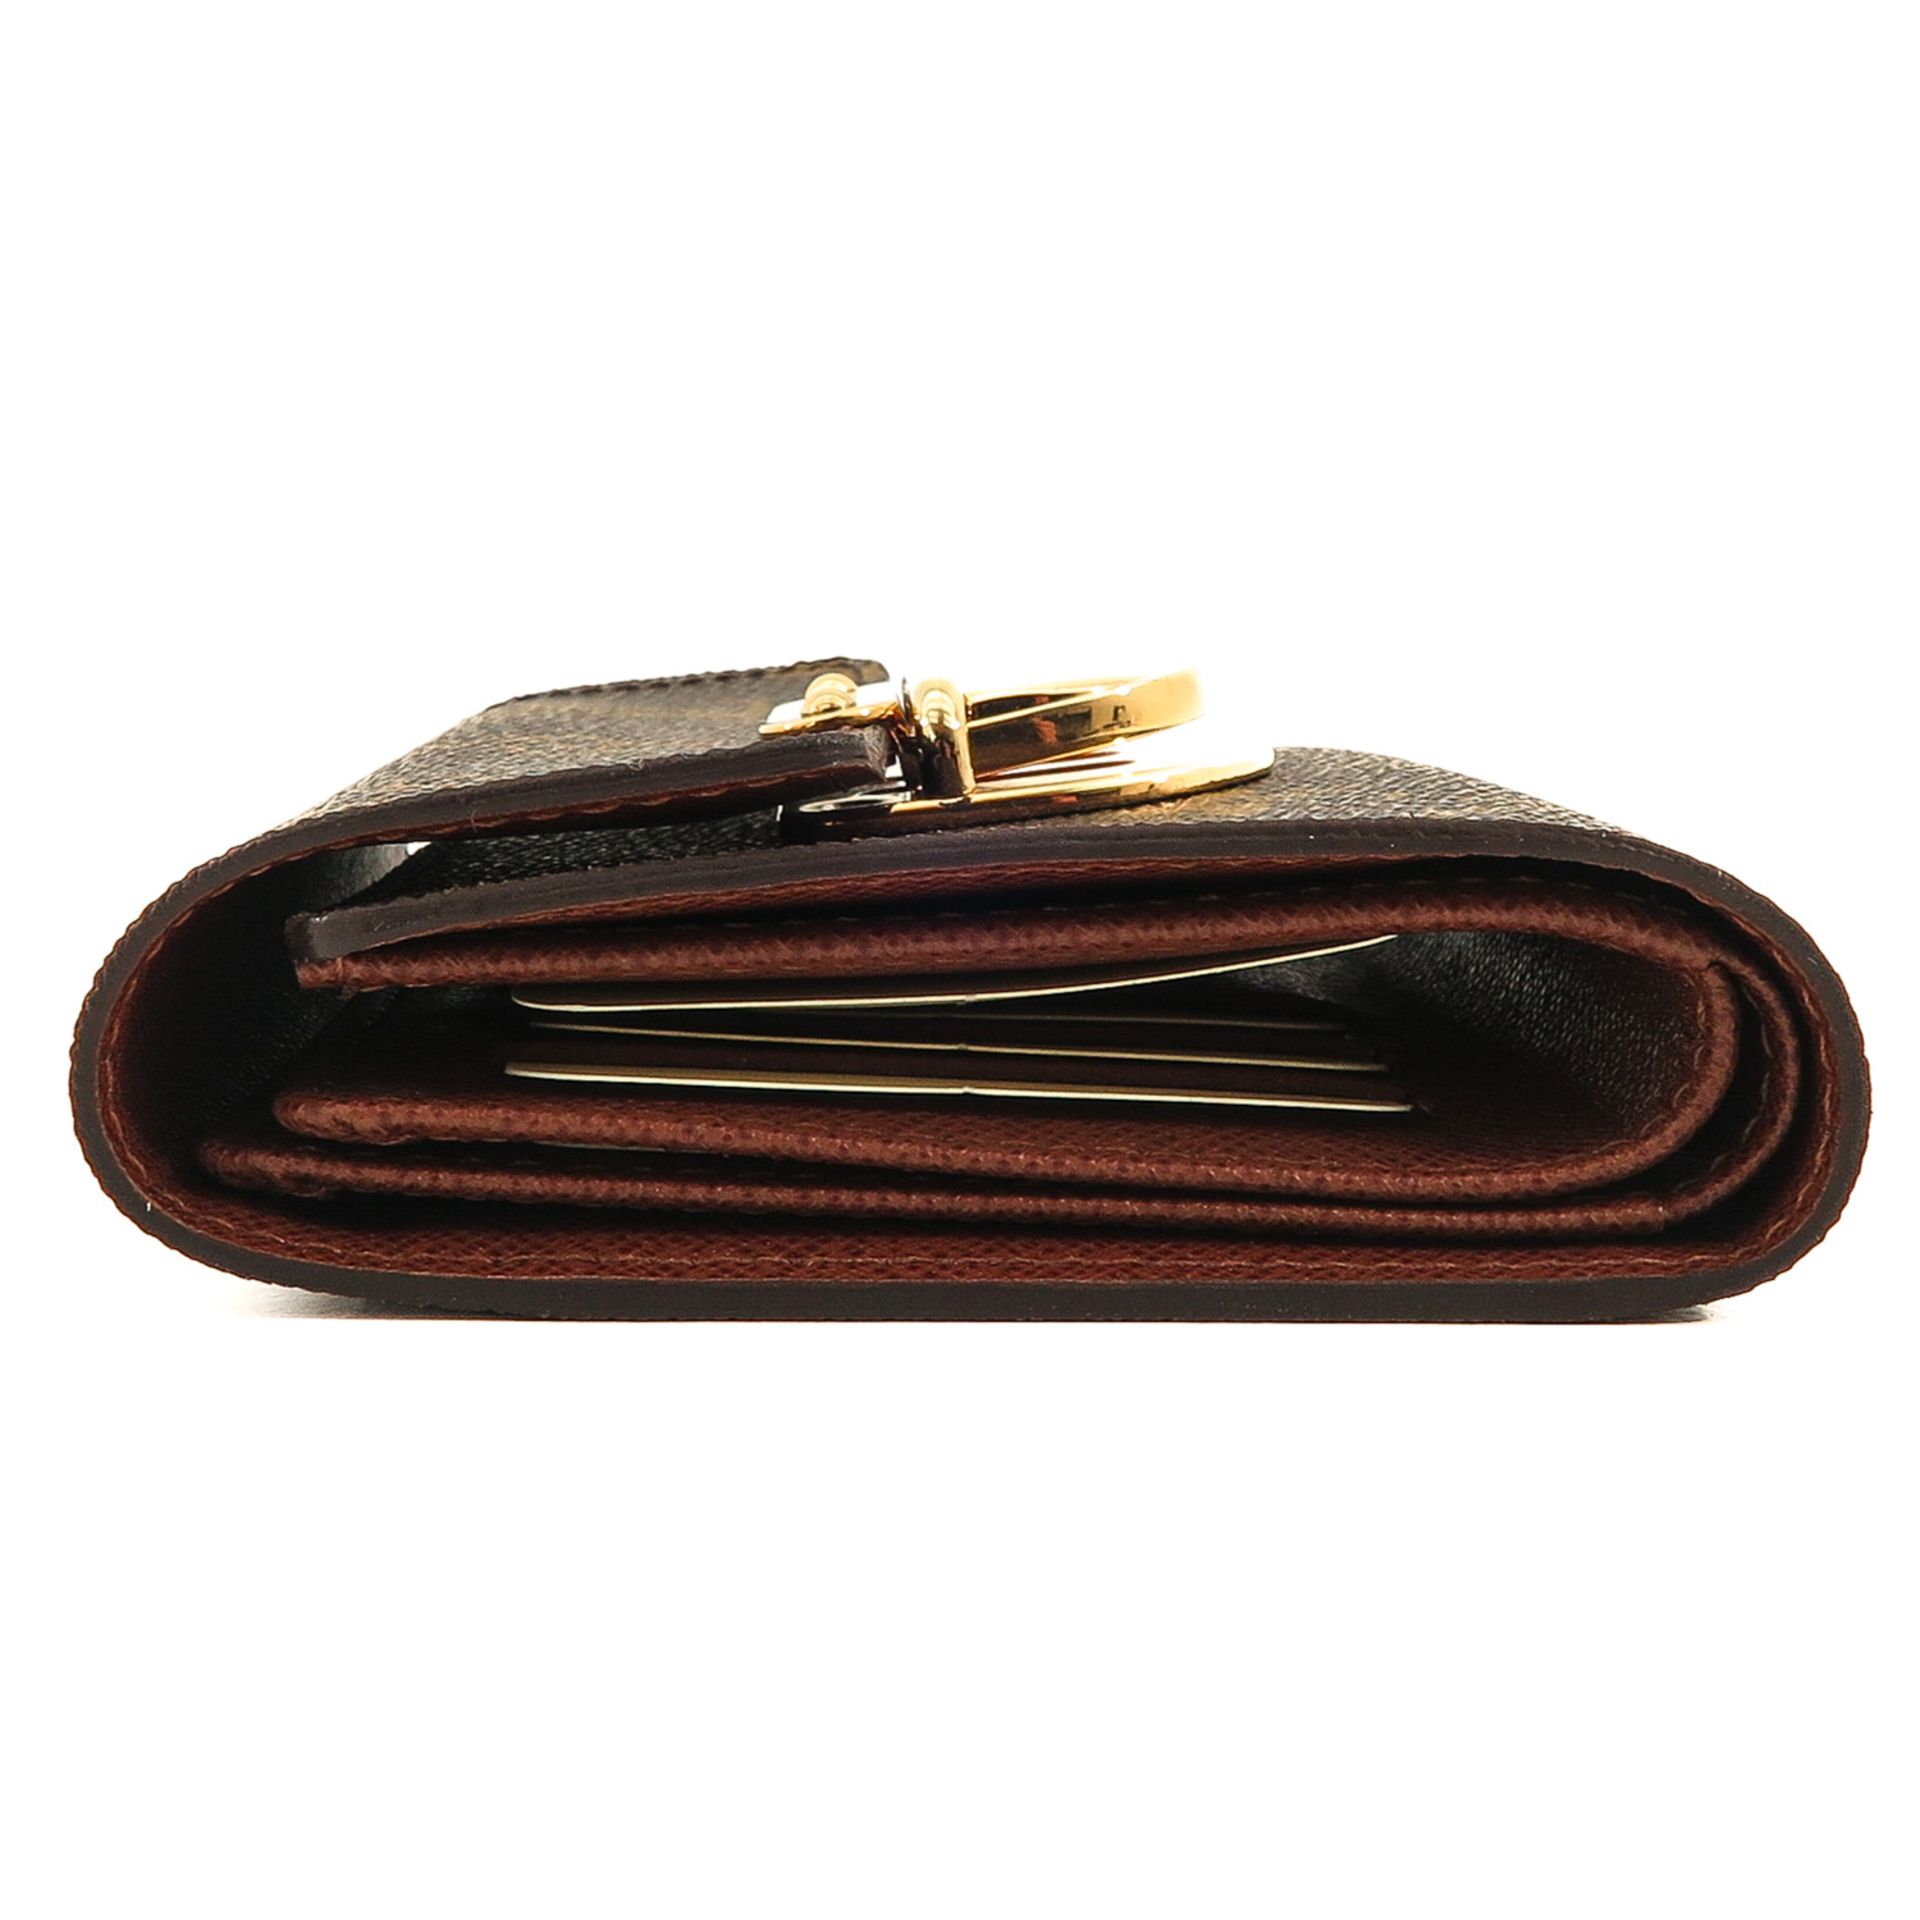 A Louis Vuiton Folding Wallet - Image 5 of 9